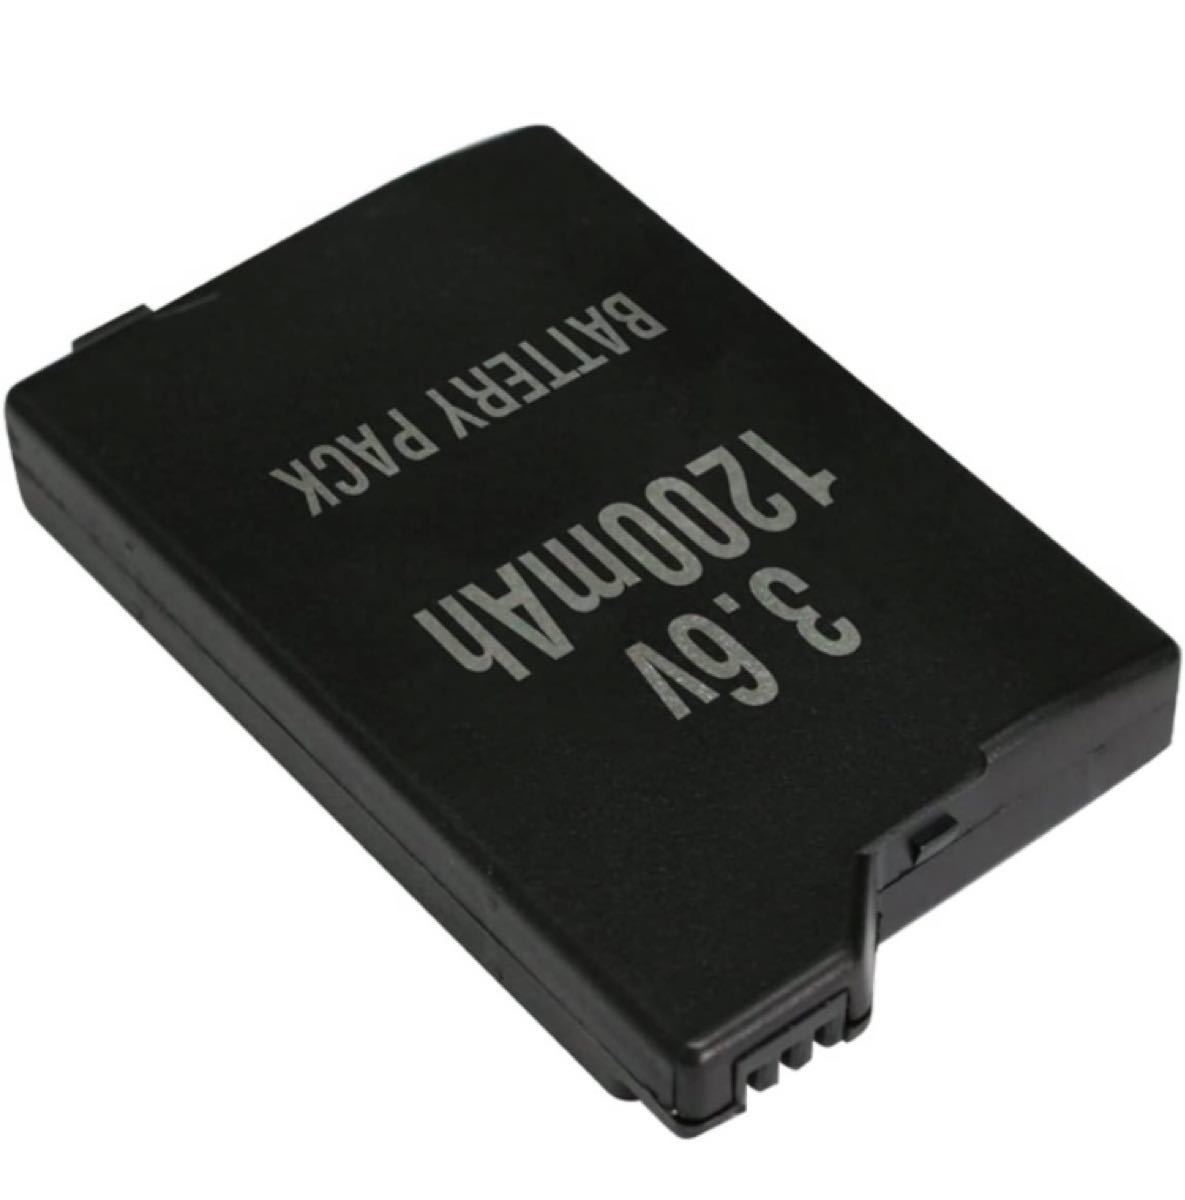 PSP 1000用 バッテリーパック 互換 [PSE認証済] バッテリー交換用 互換バッテリー メモリーカード